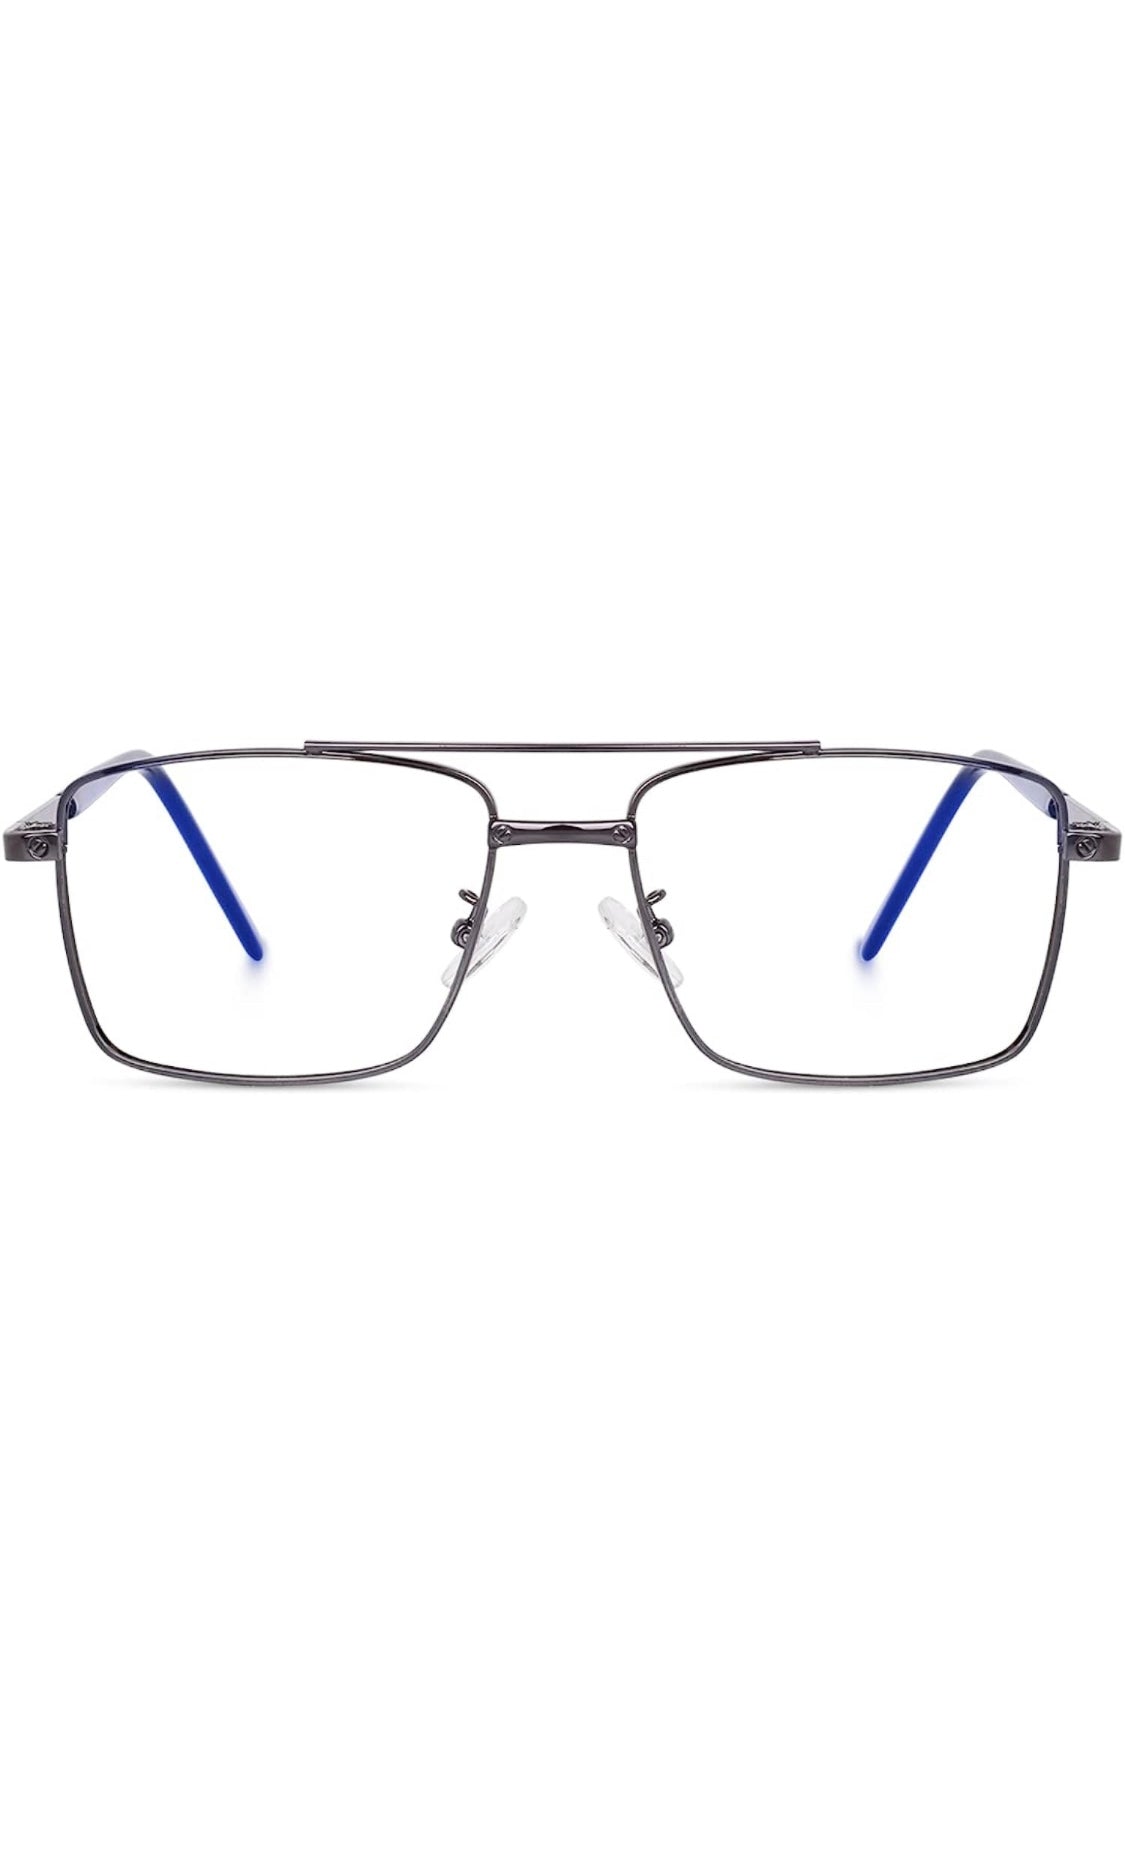 Jodykoes® New Full Rim Rectangular Blue Light Protection Computer Eyeglasses Metal Frame With Anti Glare and Blu Cut Glasses Spectacles for Men and Women Eyewear (Black) - Jodykoes ®